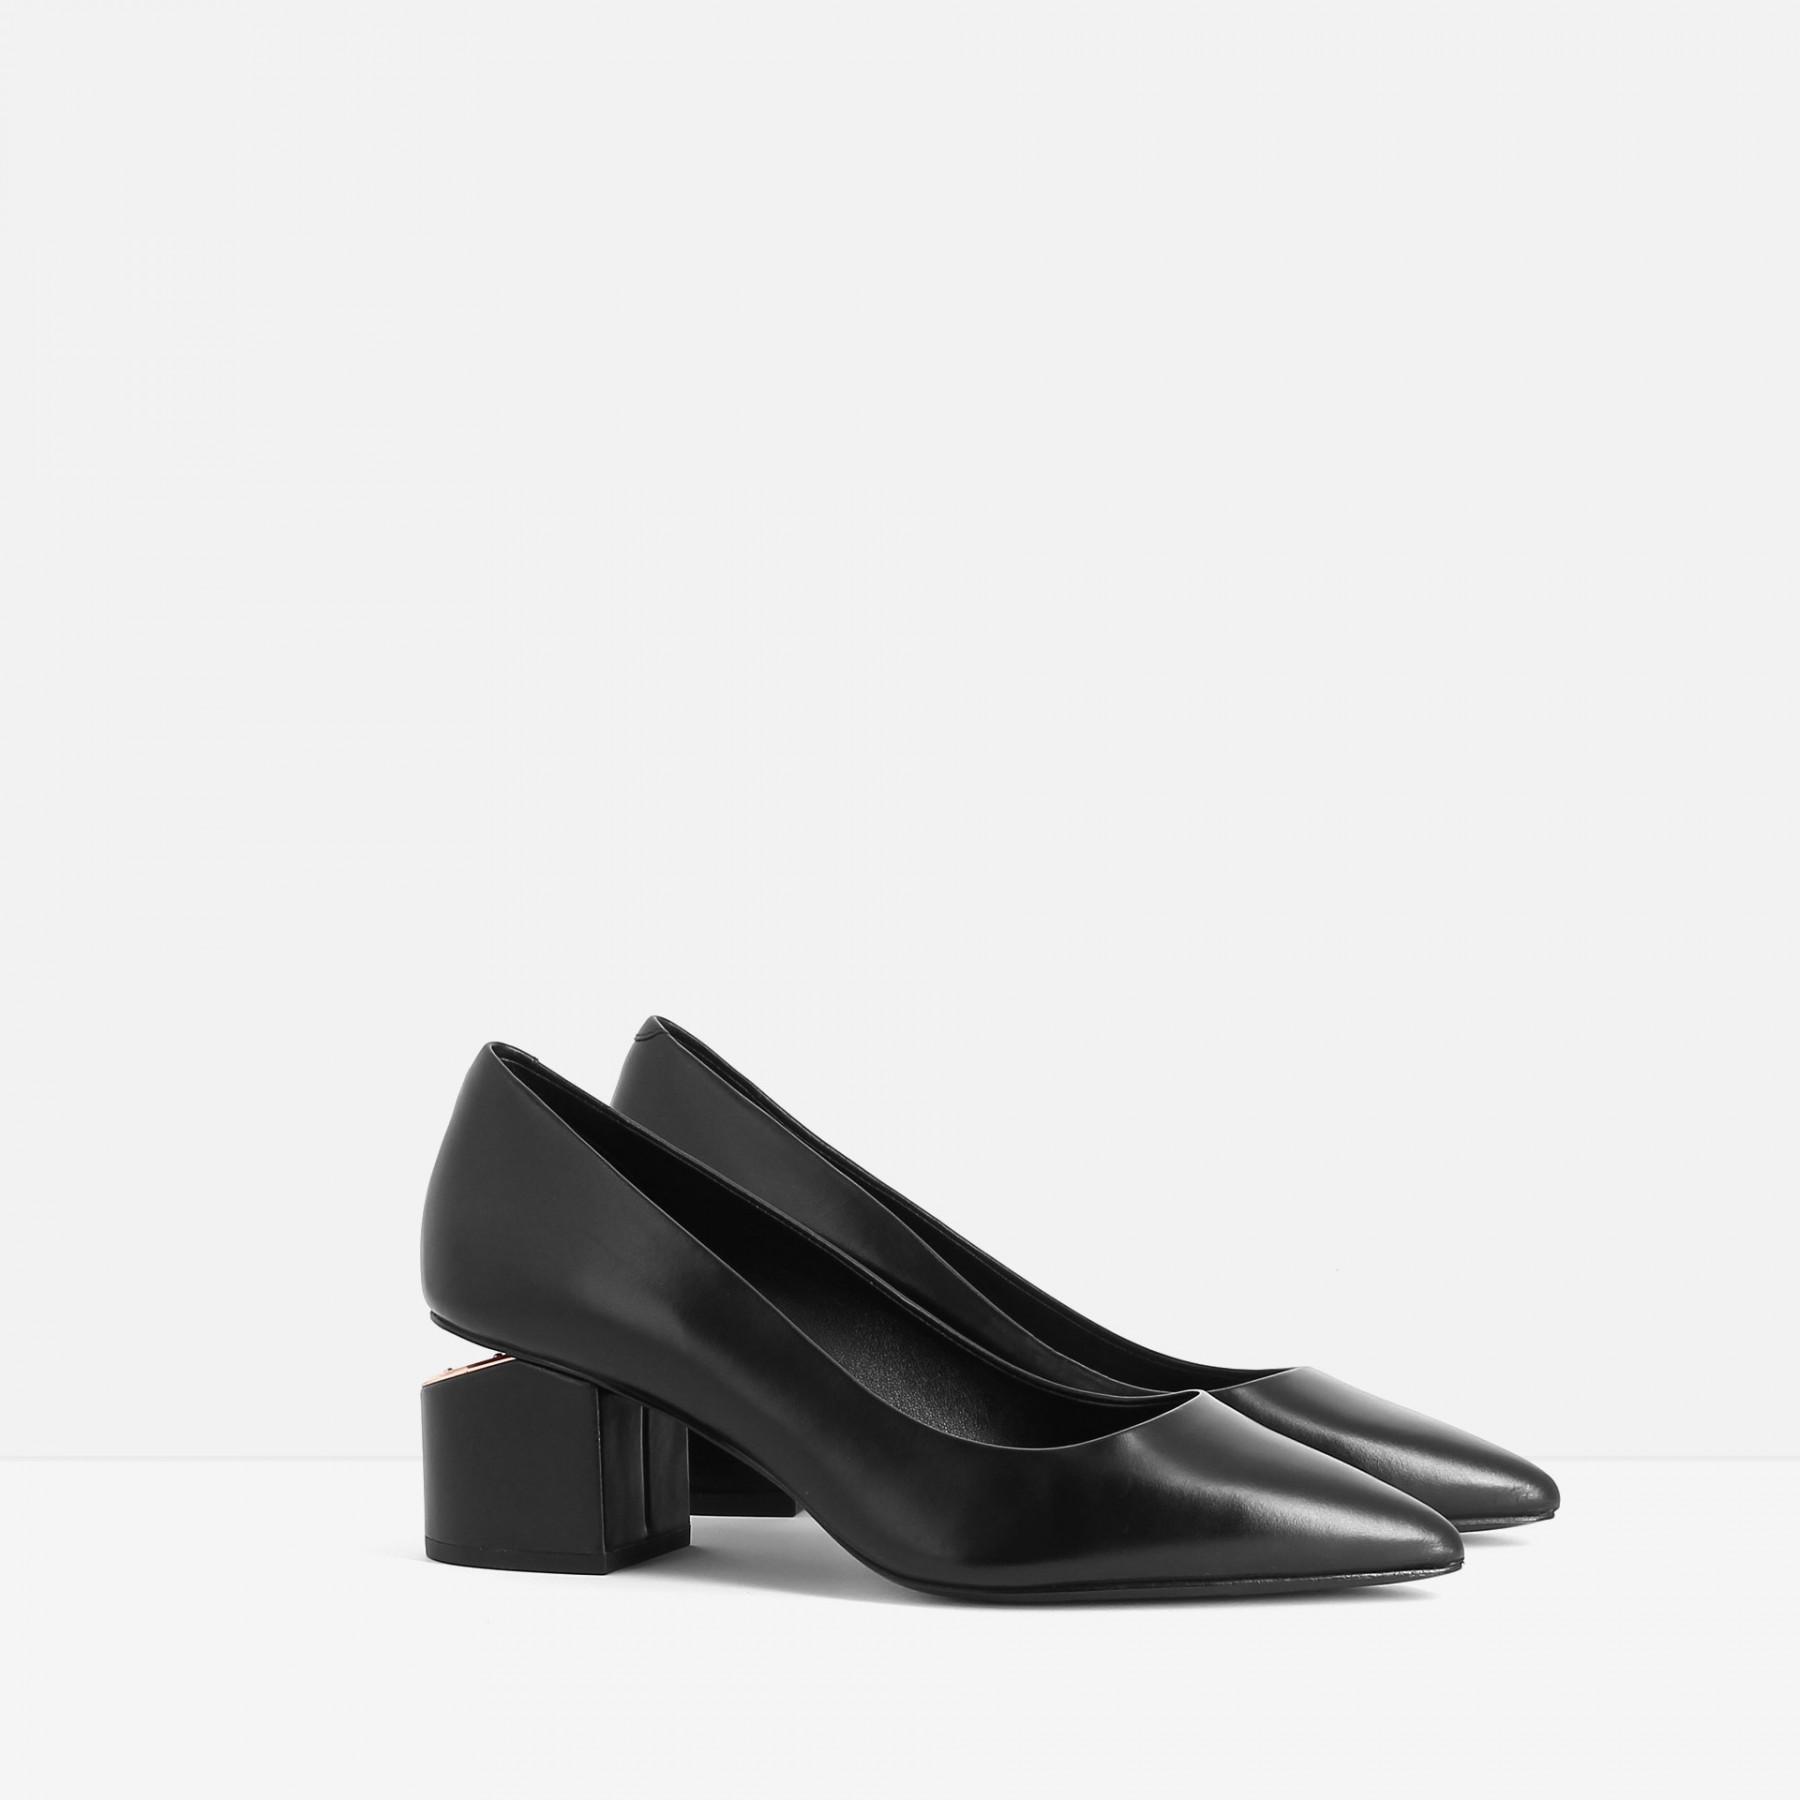 Lyst - Alexander Wang Simona Shoes in Black